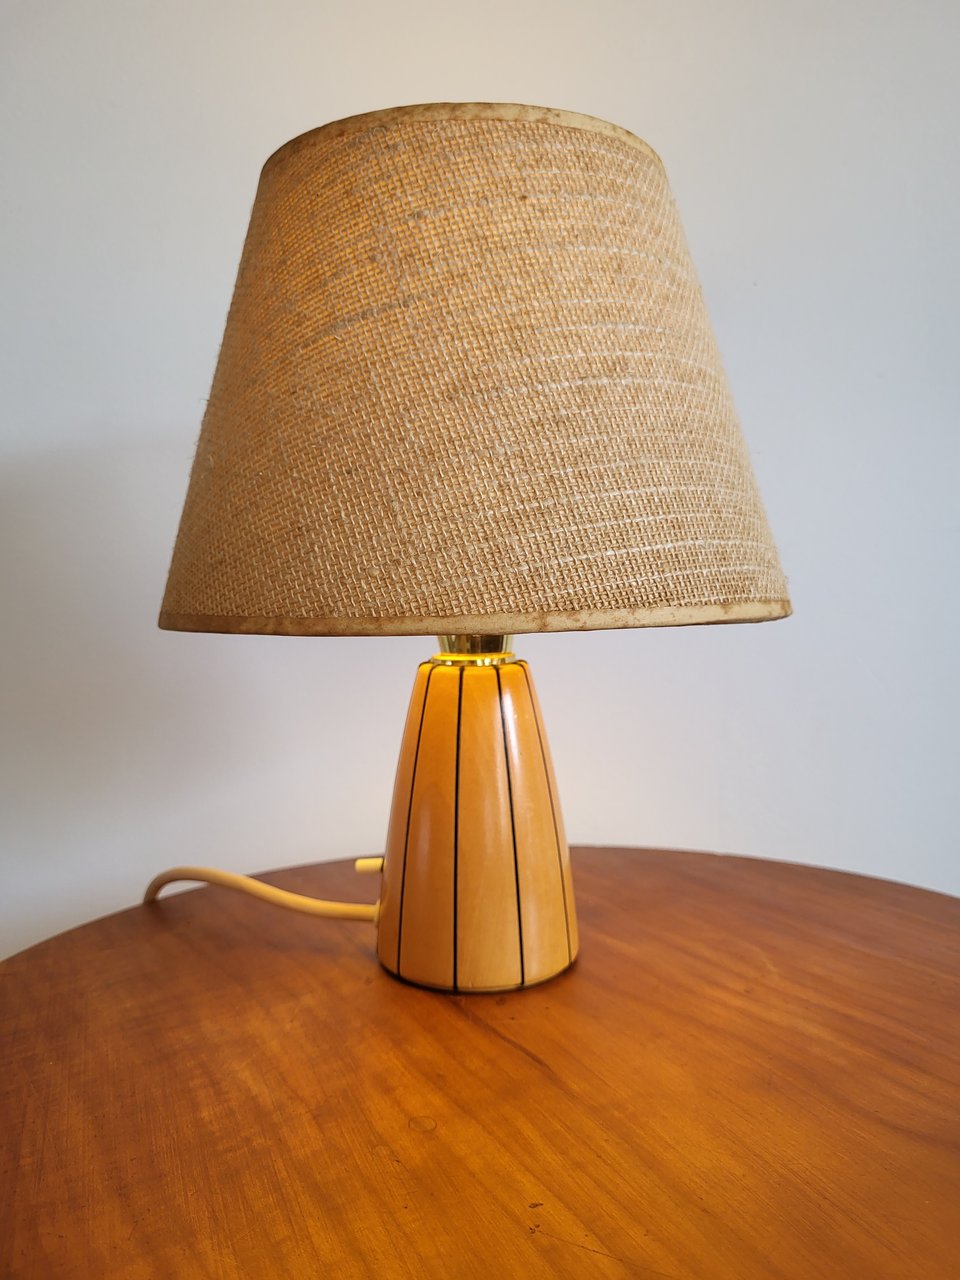 Image 3 of Vintage Tischlampe mit Holzsockel